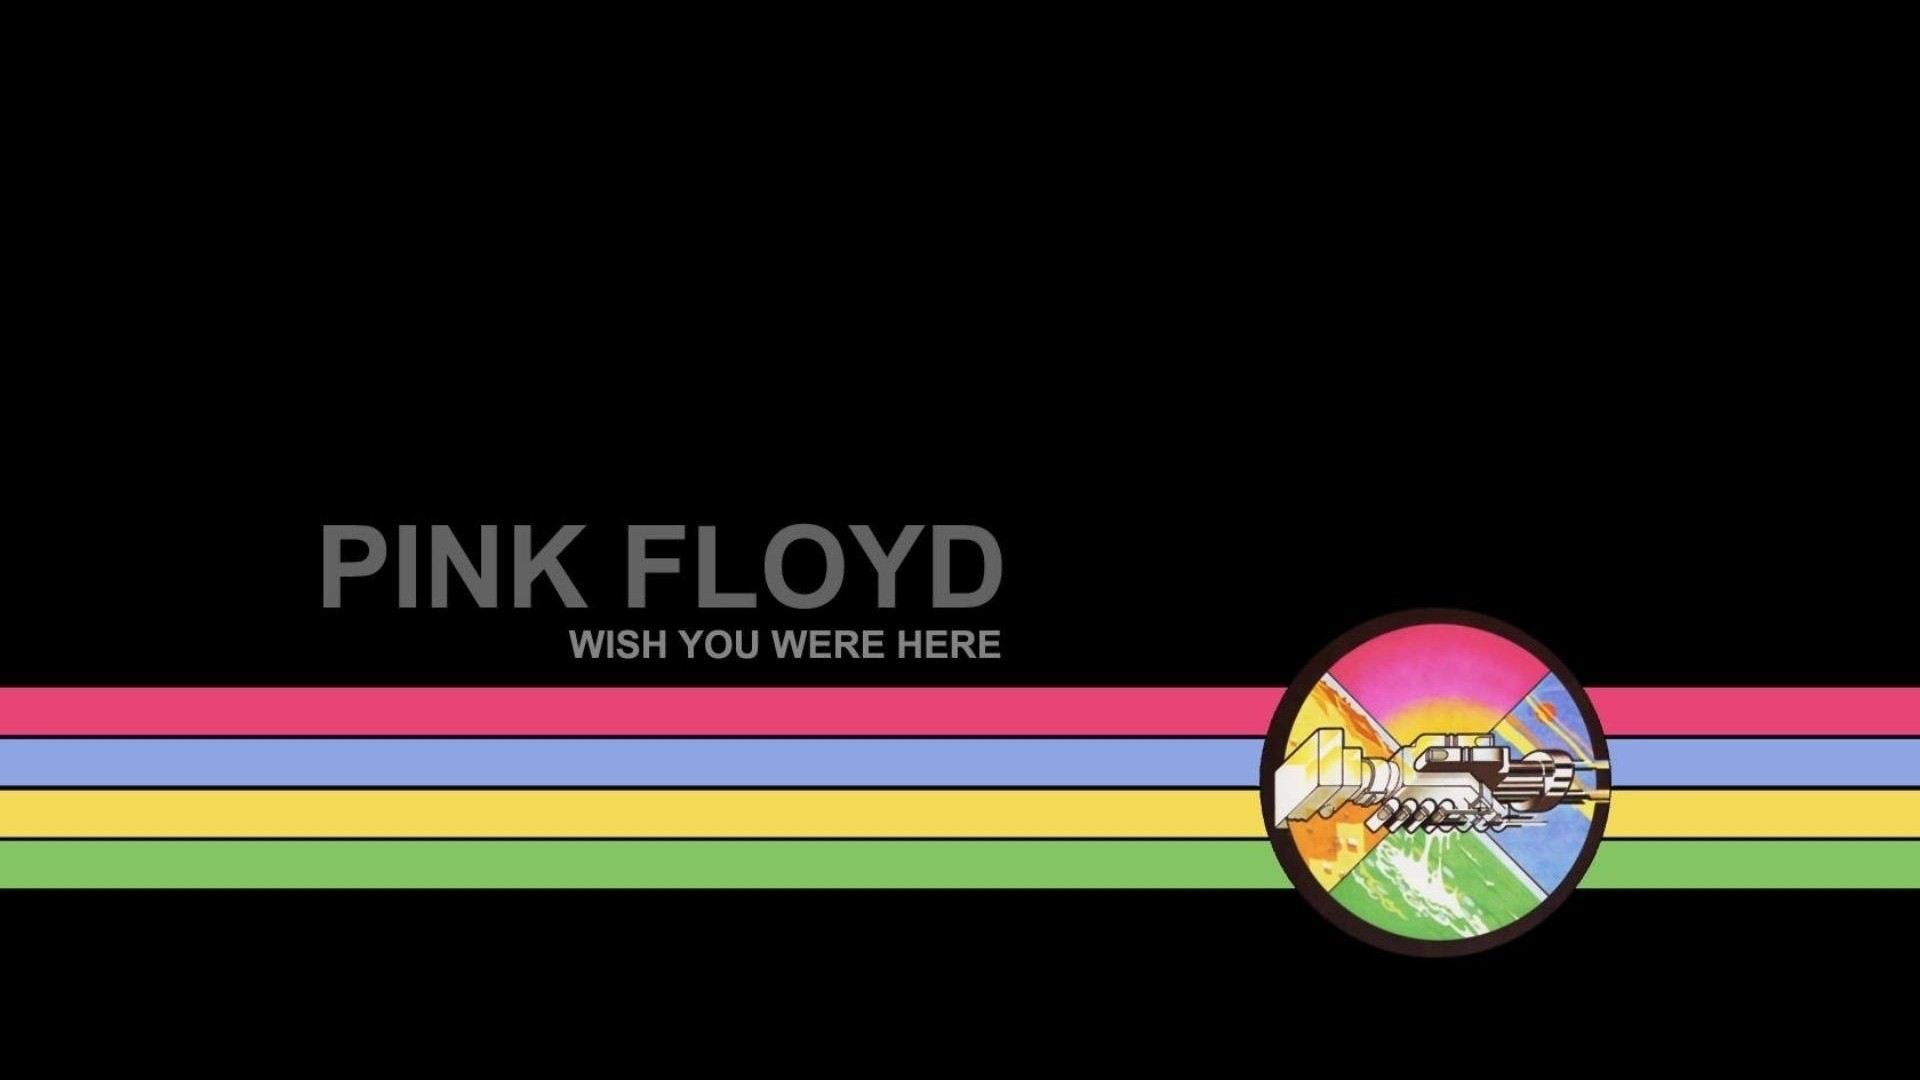 Pink Floyd Full Hd Fondo De Pantalla And Fondo De Escritorio 55260 Hot Sex Picture 0120